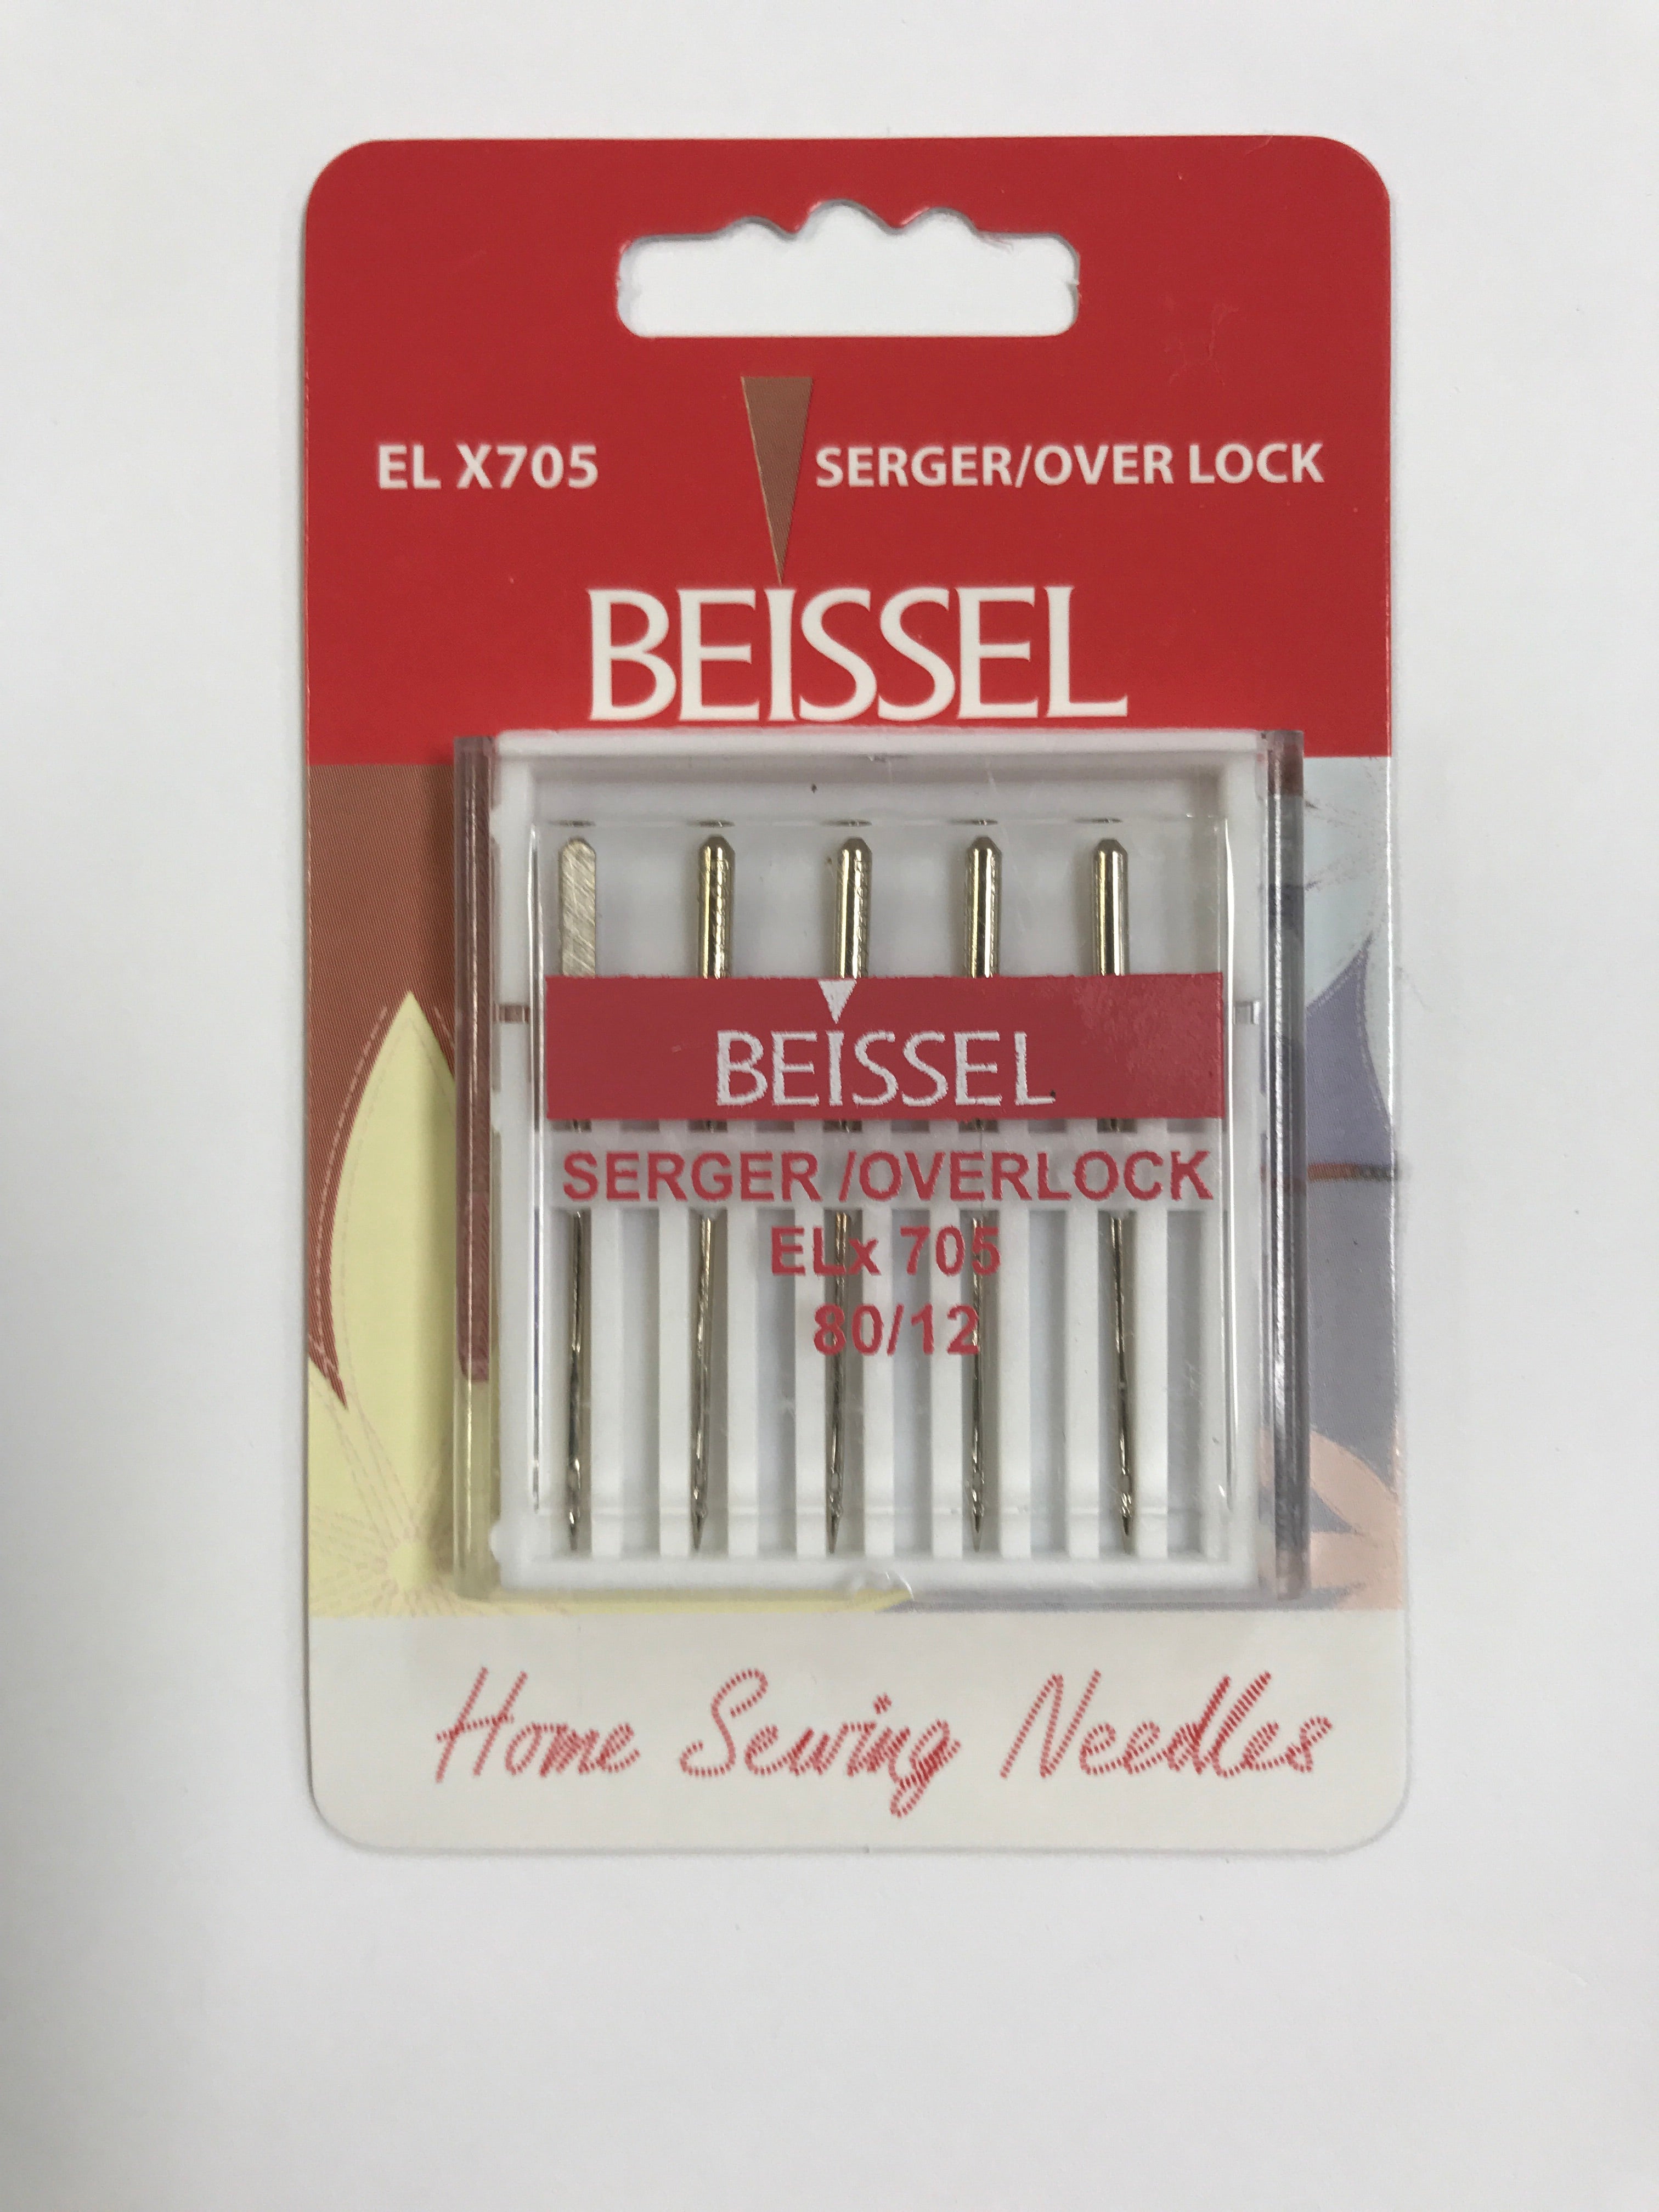 Beissel Serger Over Lock Needles 80/12 - 5 pack - ELx705